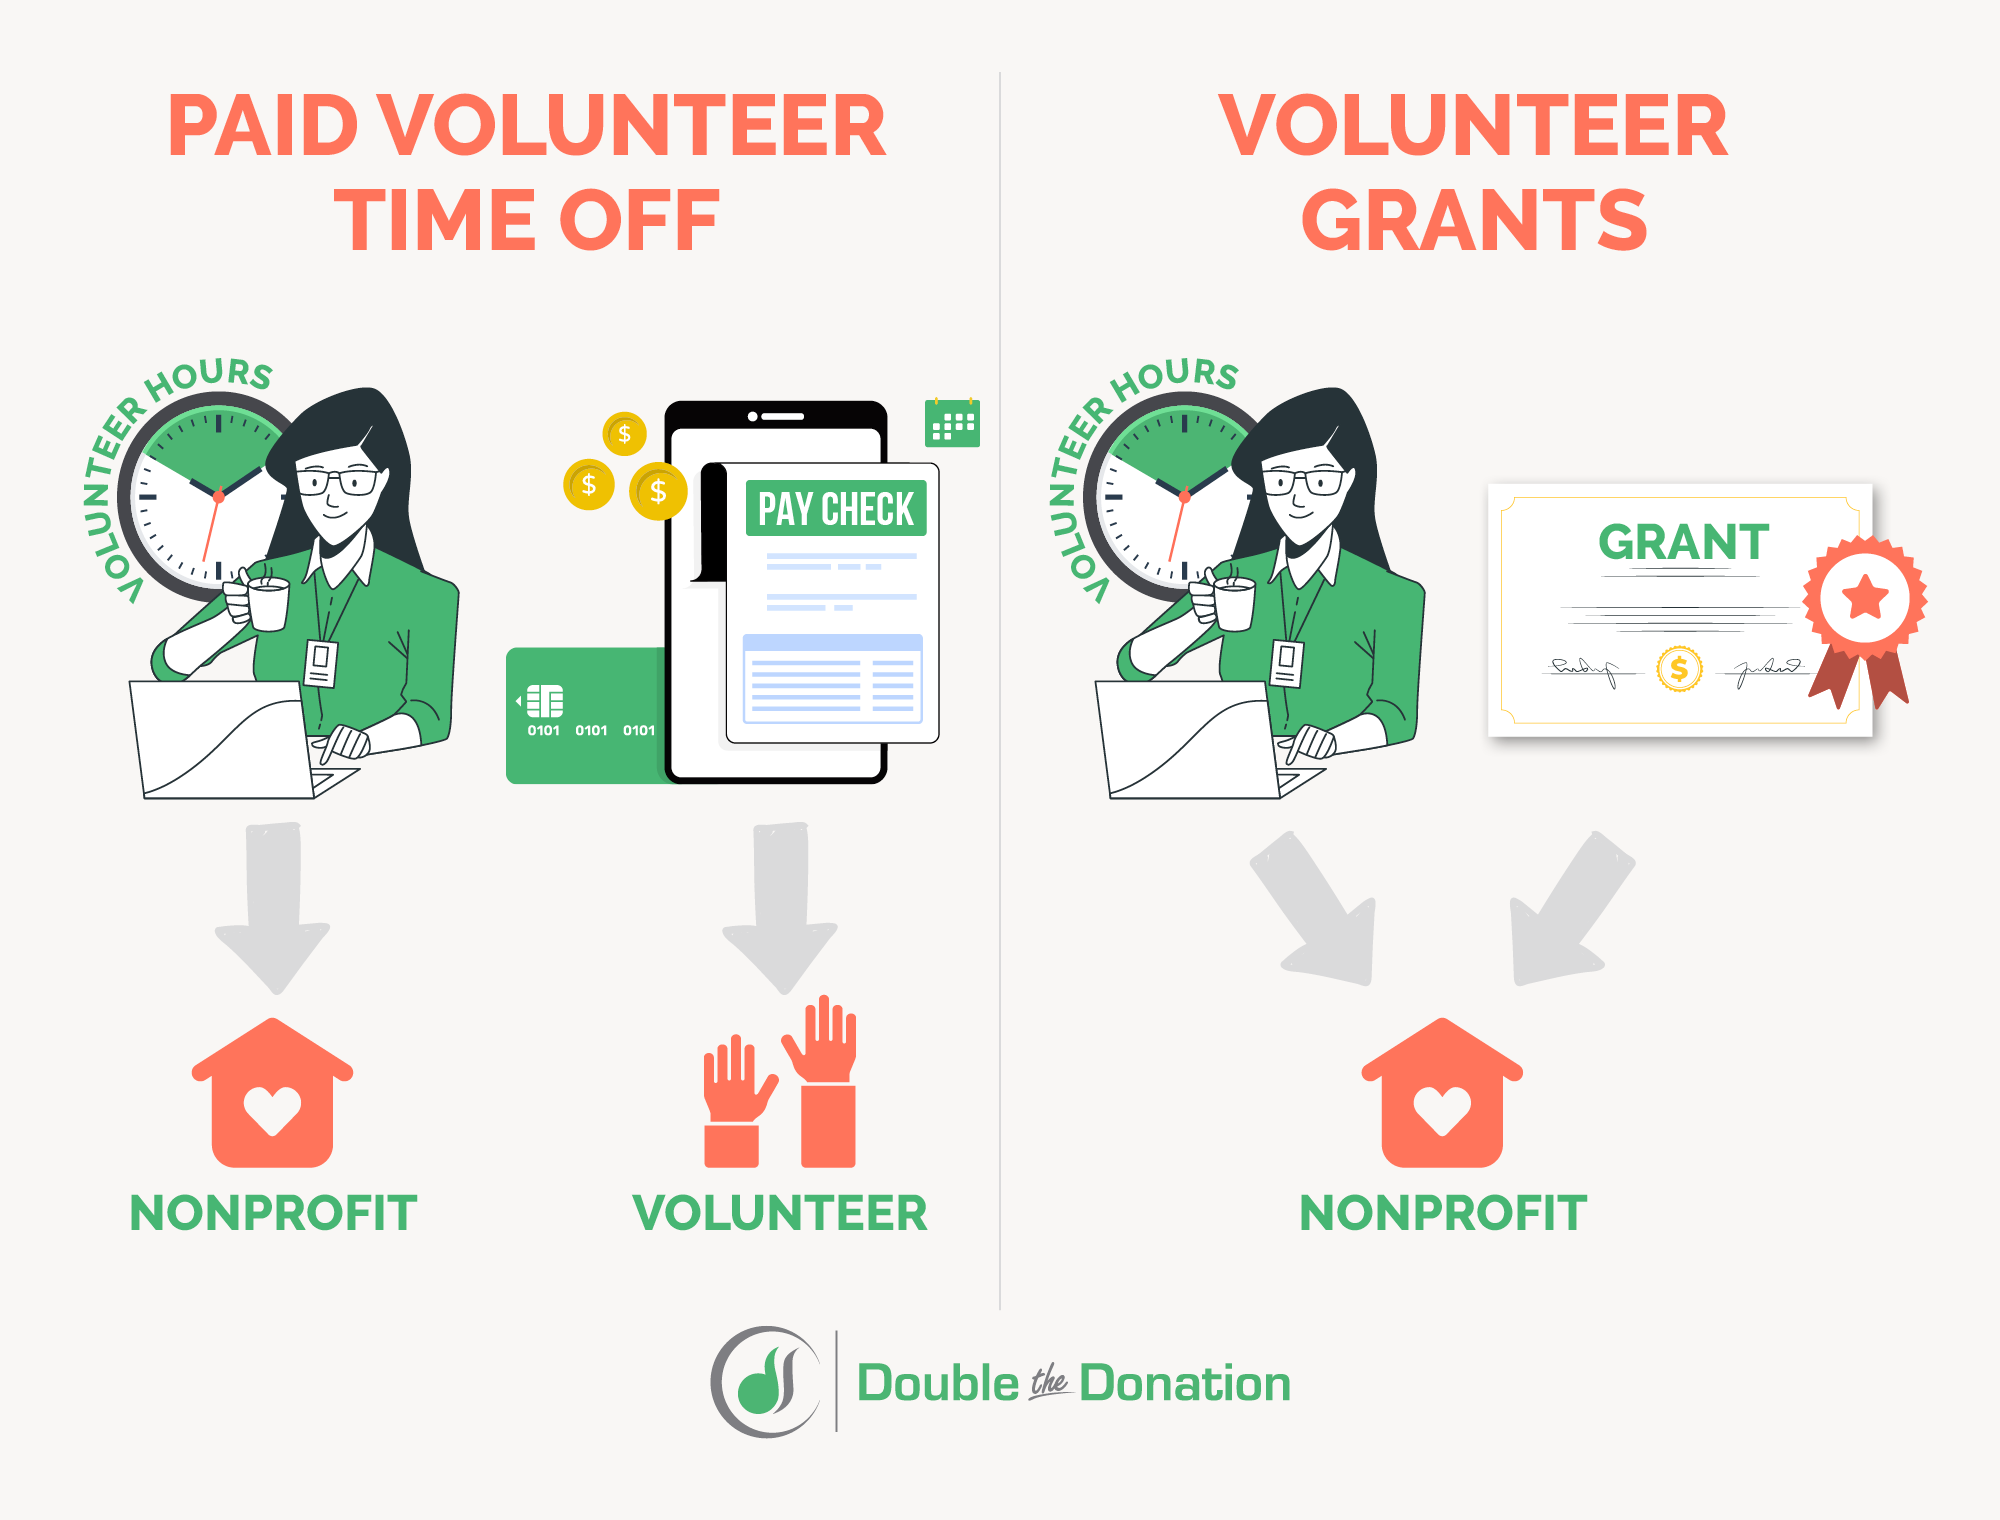 Volunteer time off vs. volunteer grants comparison